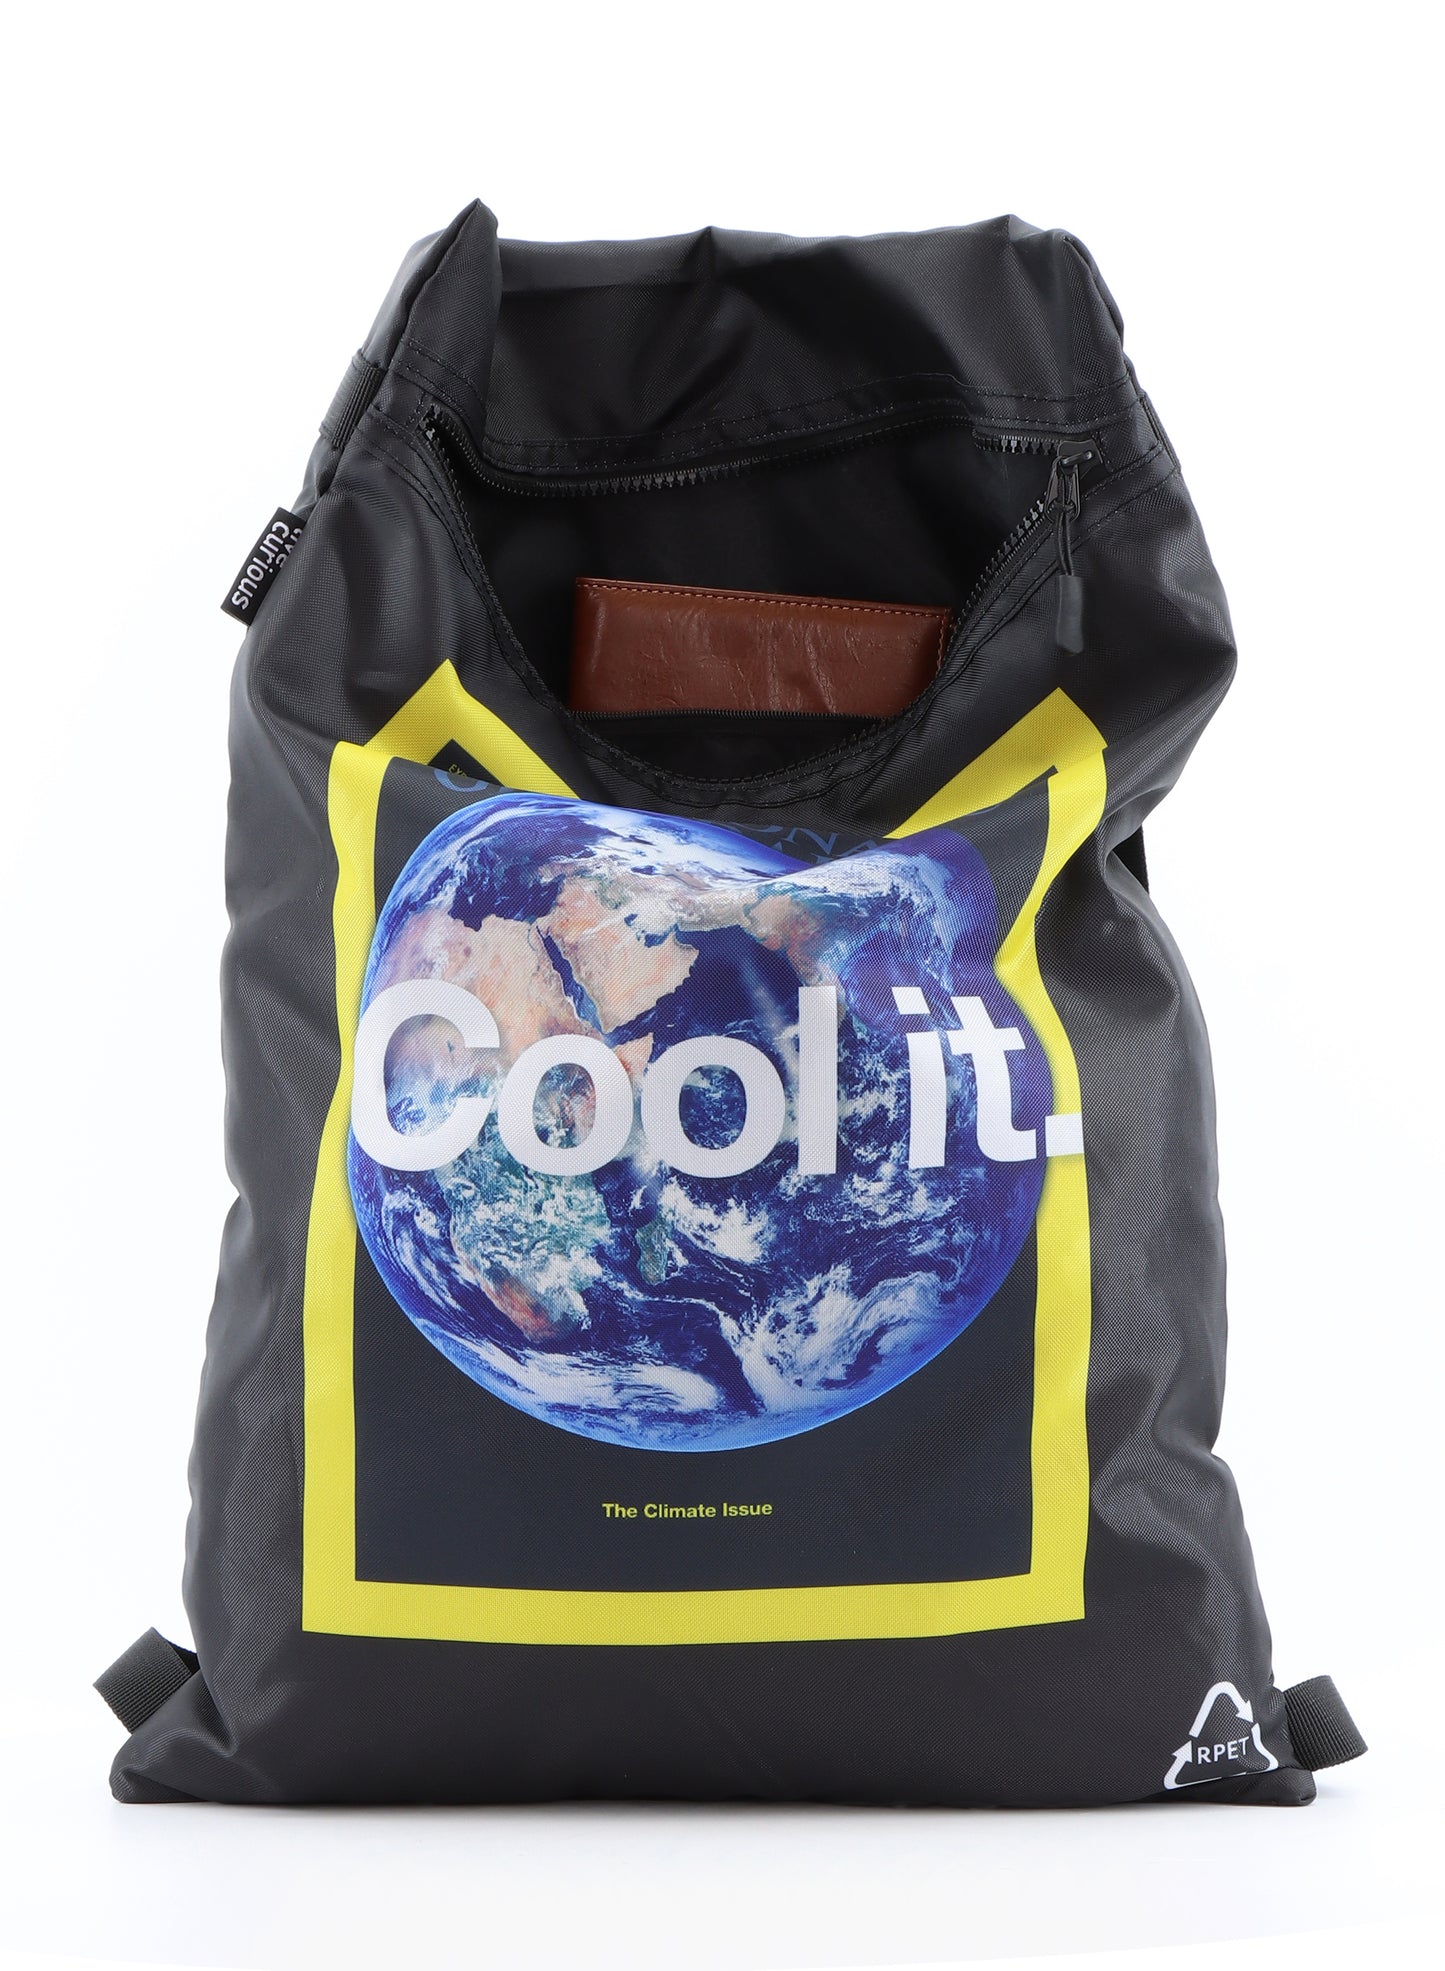 Sac de sport / sac à dos National Geographic léger - 0 -10 litres - Vegan - Terre - Noir